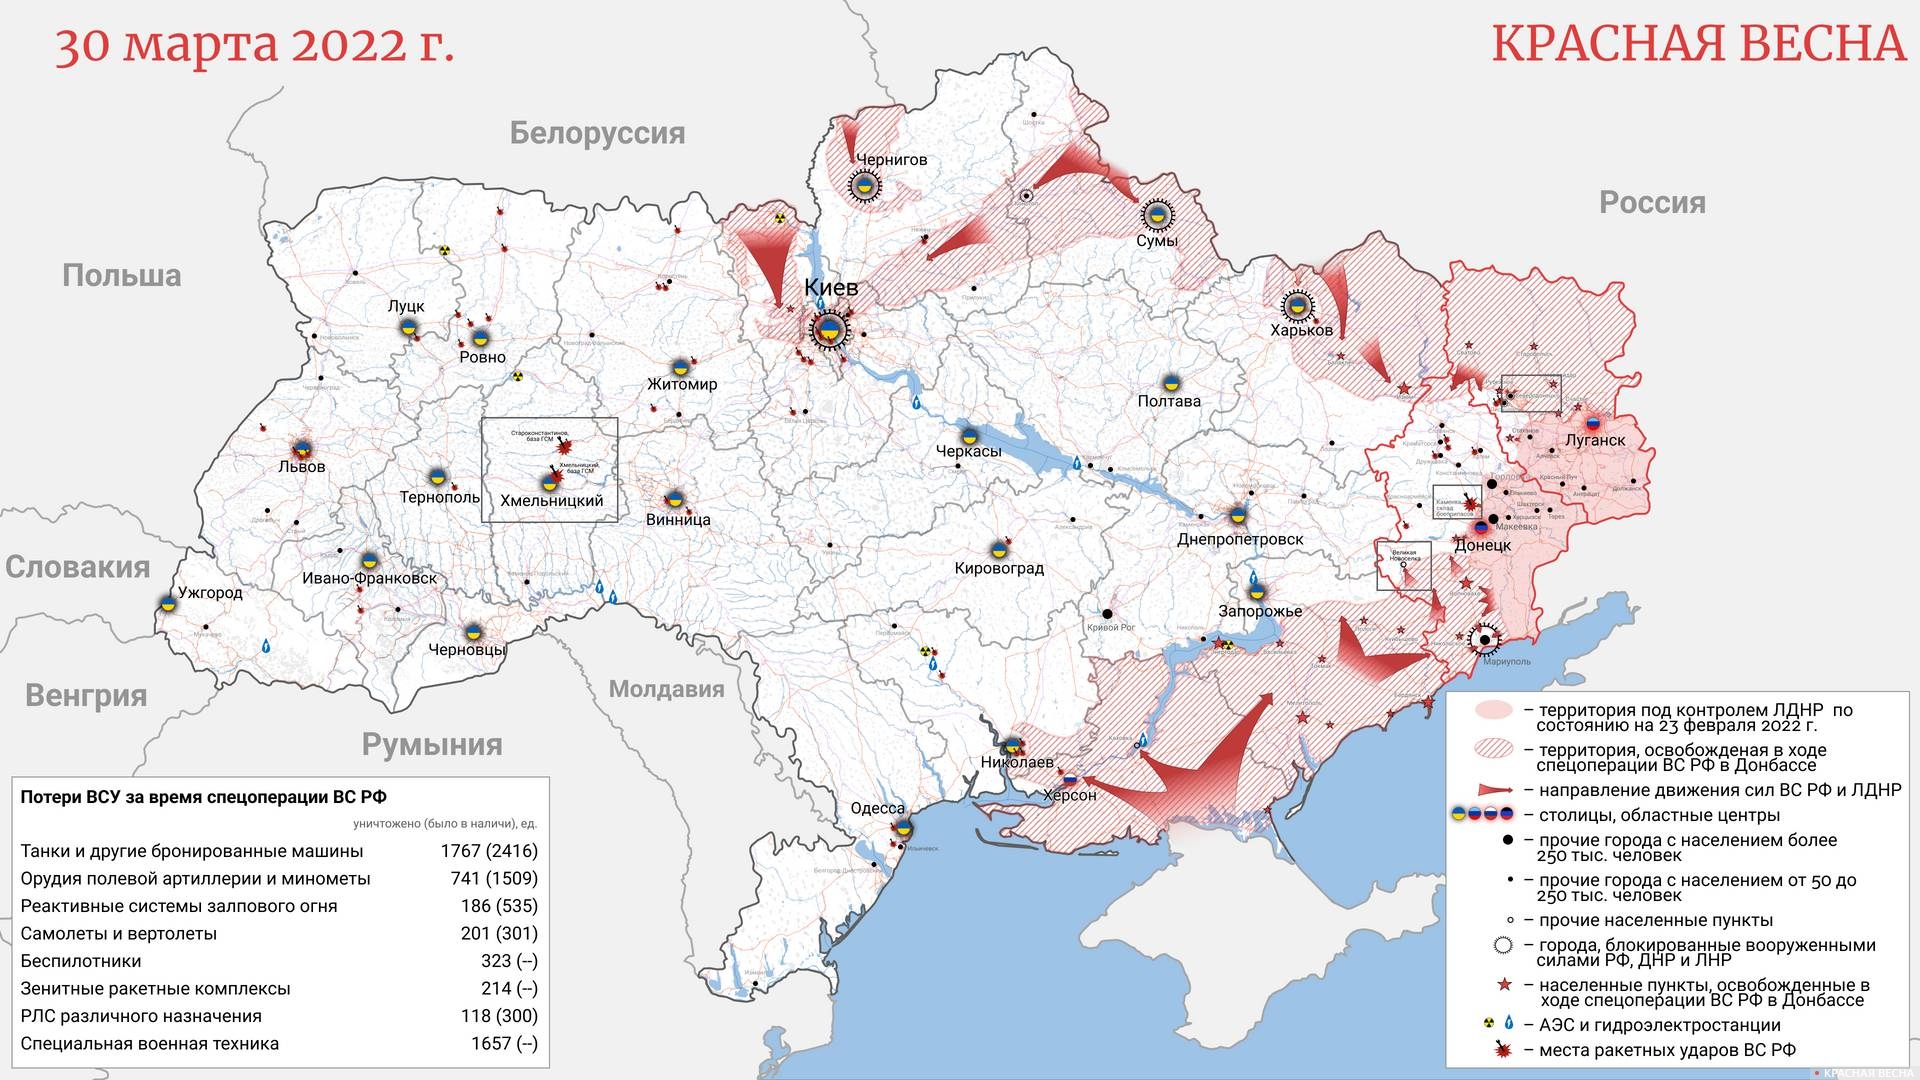 Ситуация на Украине по состоянию на 30 марта 2022 года